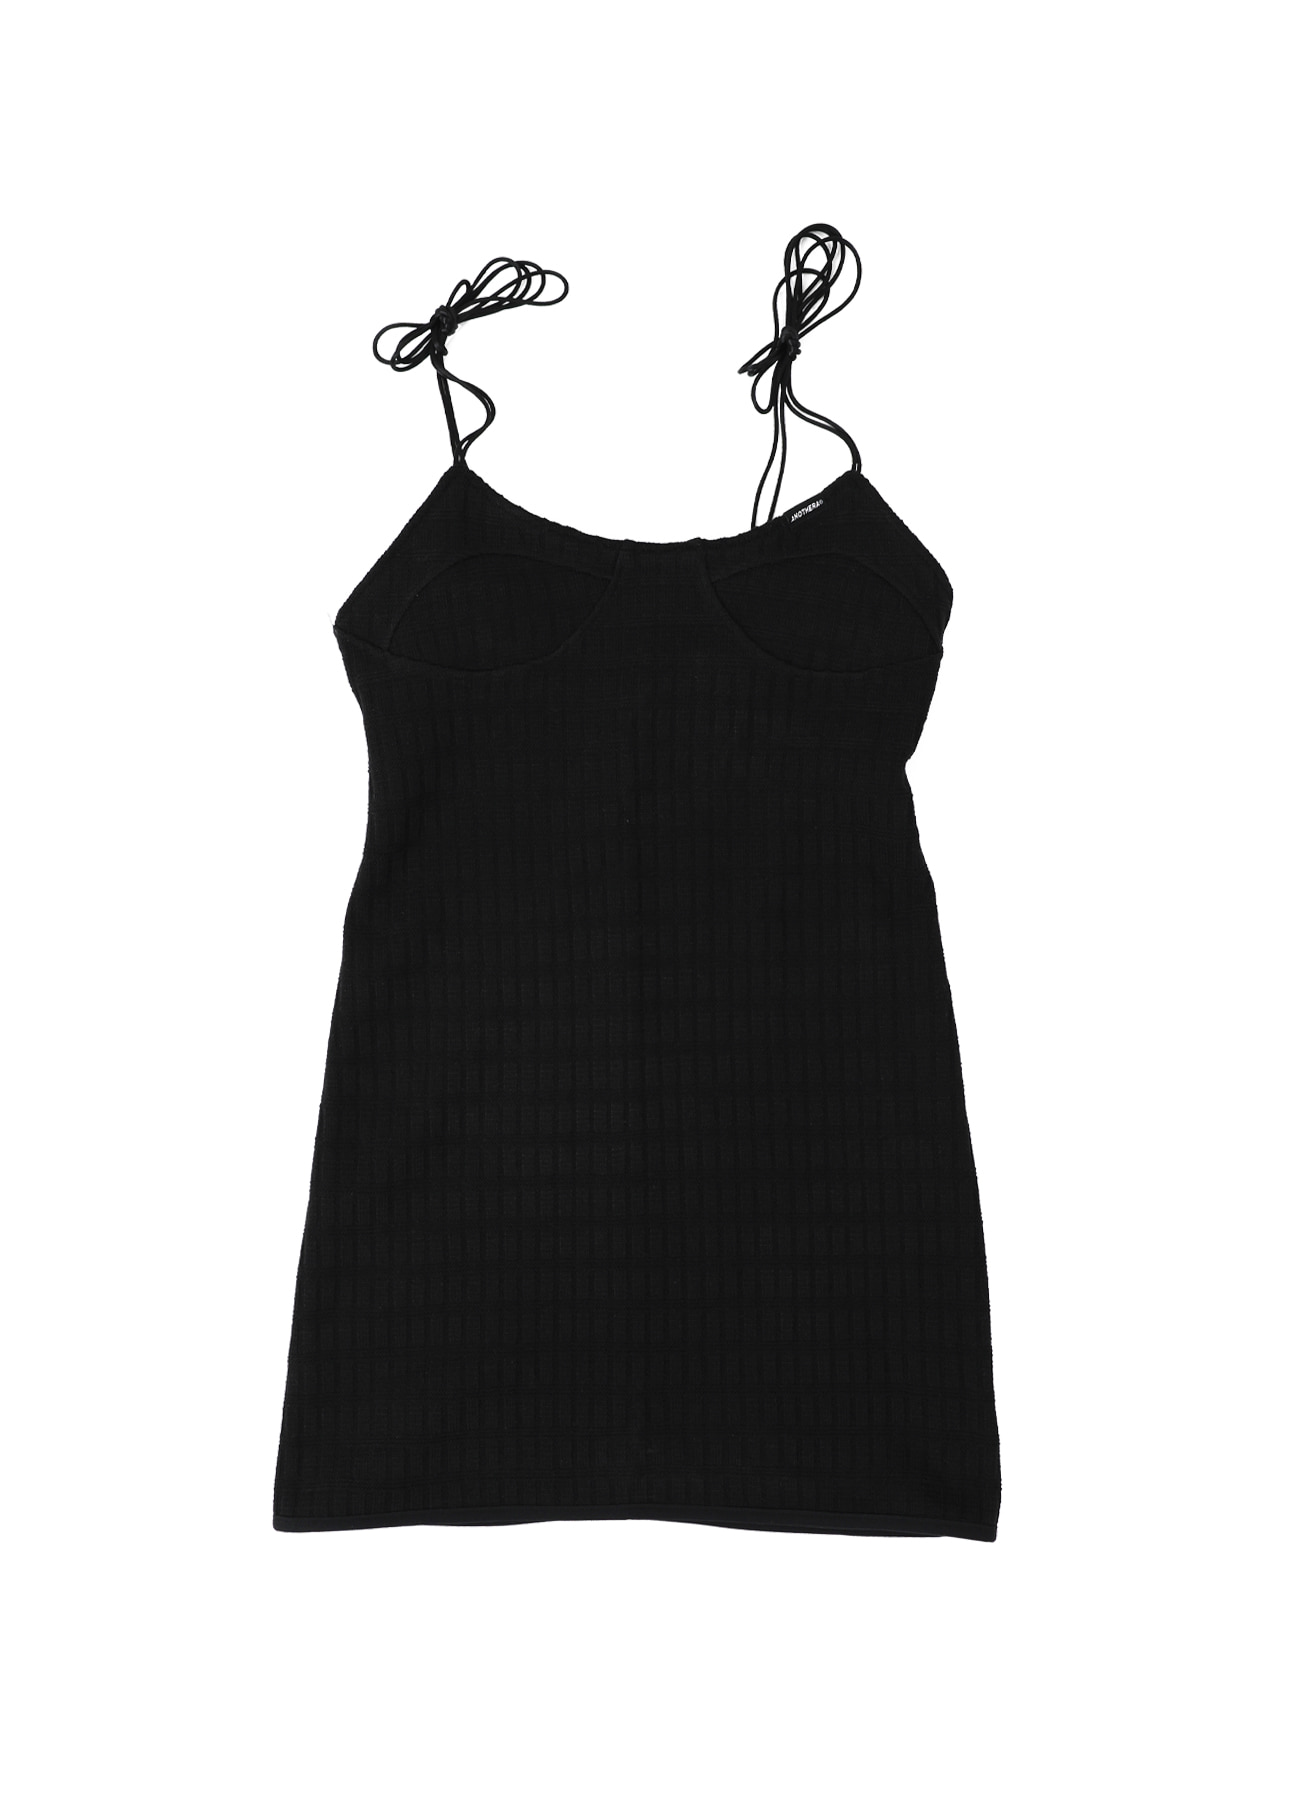 Bodycon Knit Dress (2 color)